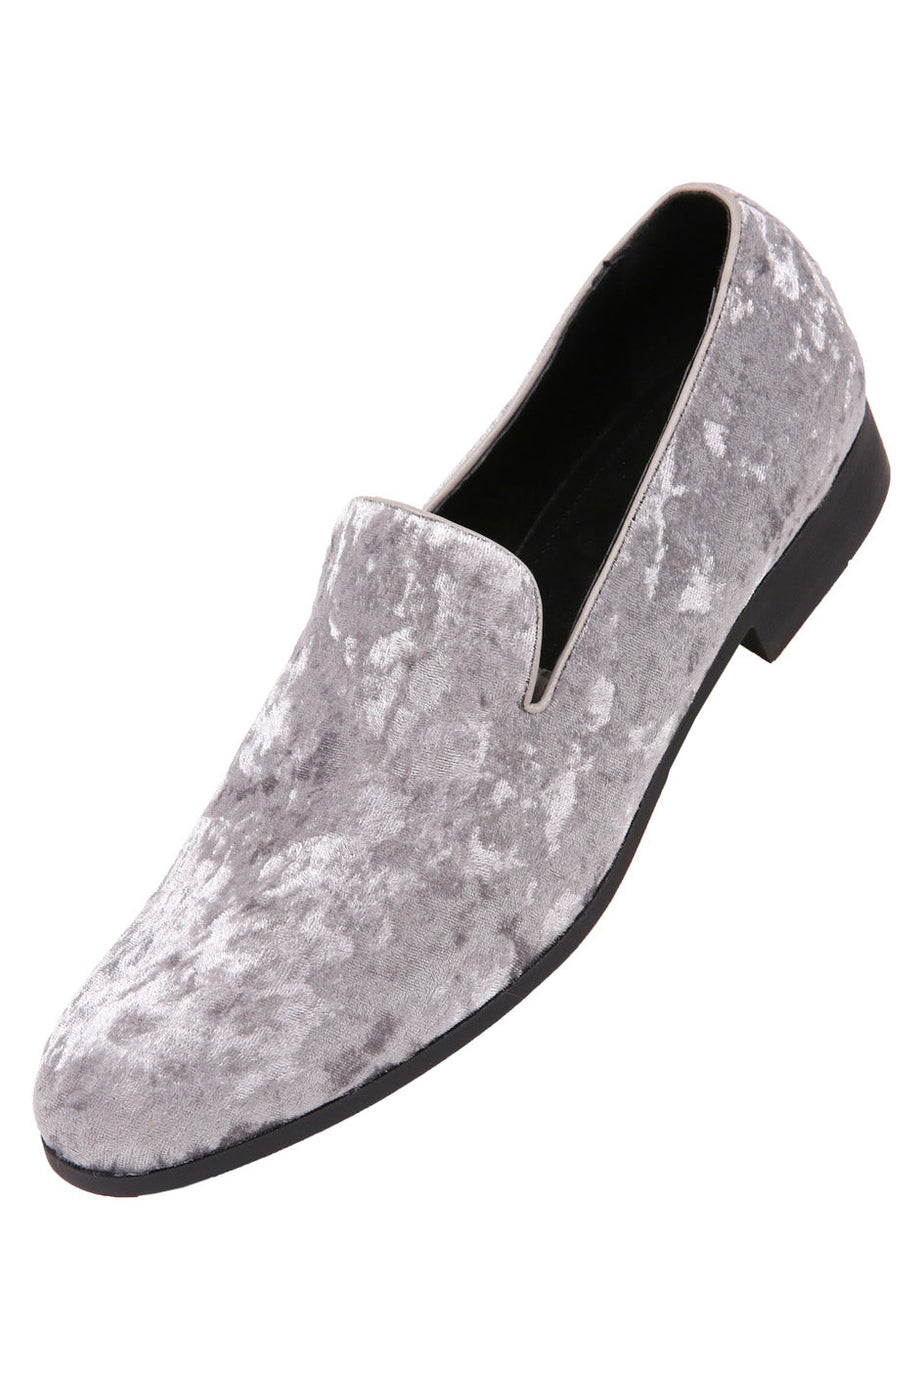 Amali "Hauser II" Silver Tuxedo Shoes